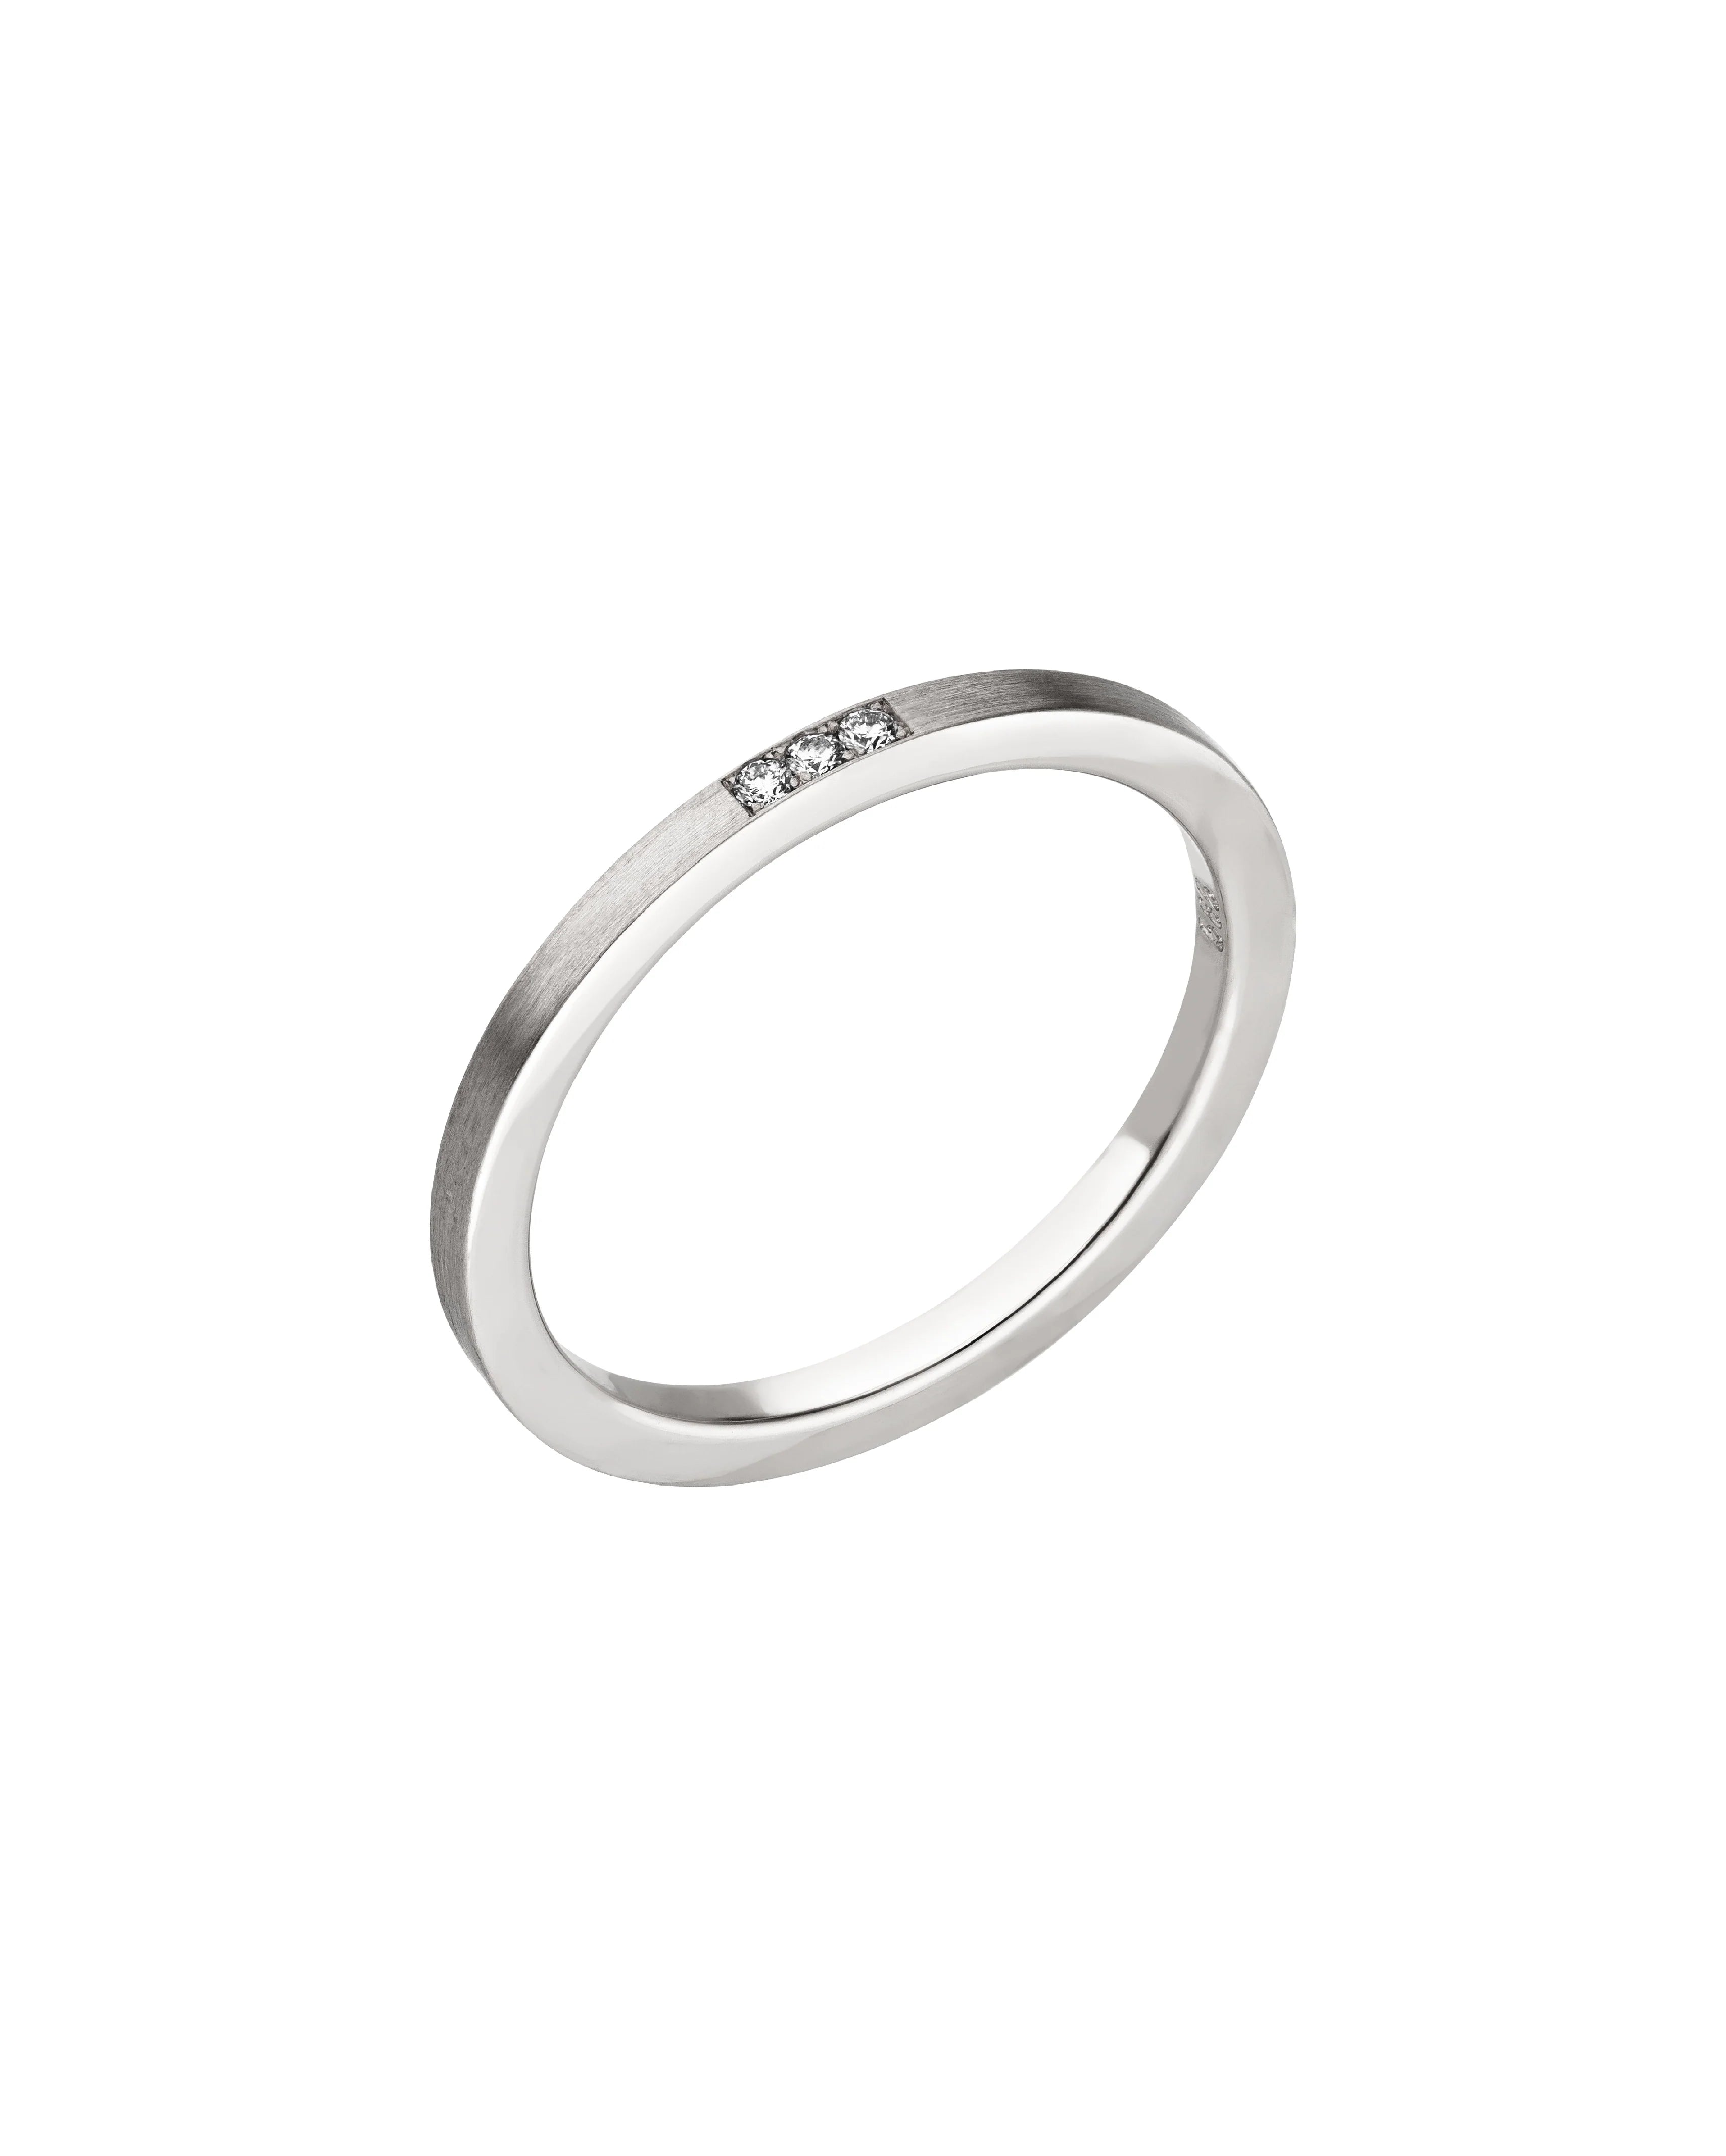 FINA SQUARE - Weißgold Verlobungsring - Ring Weißgold 585